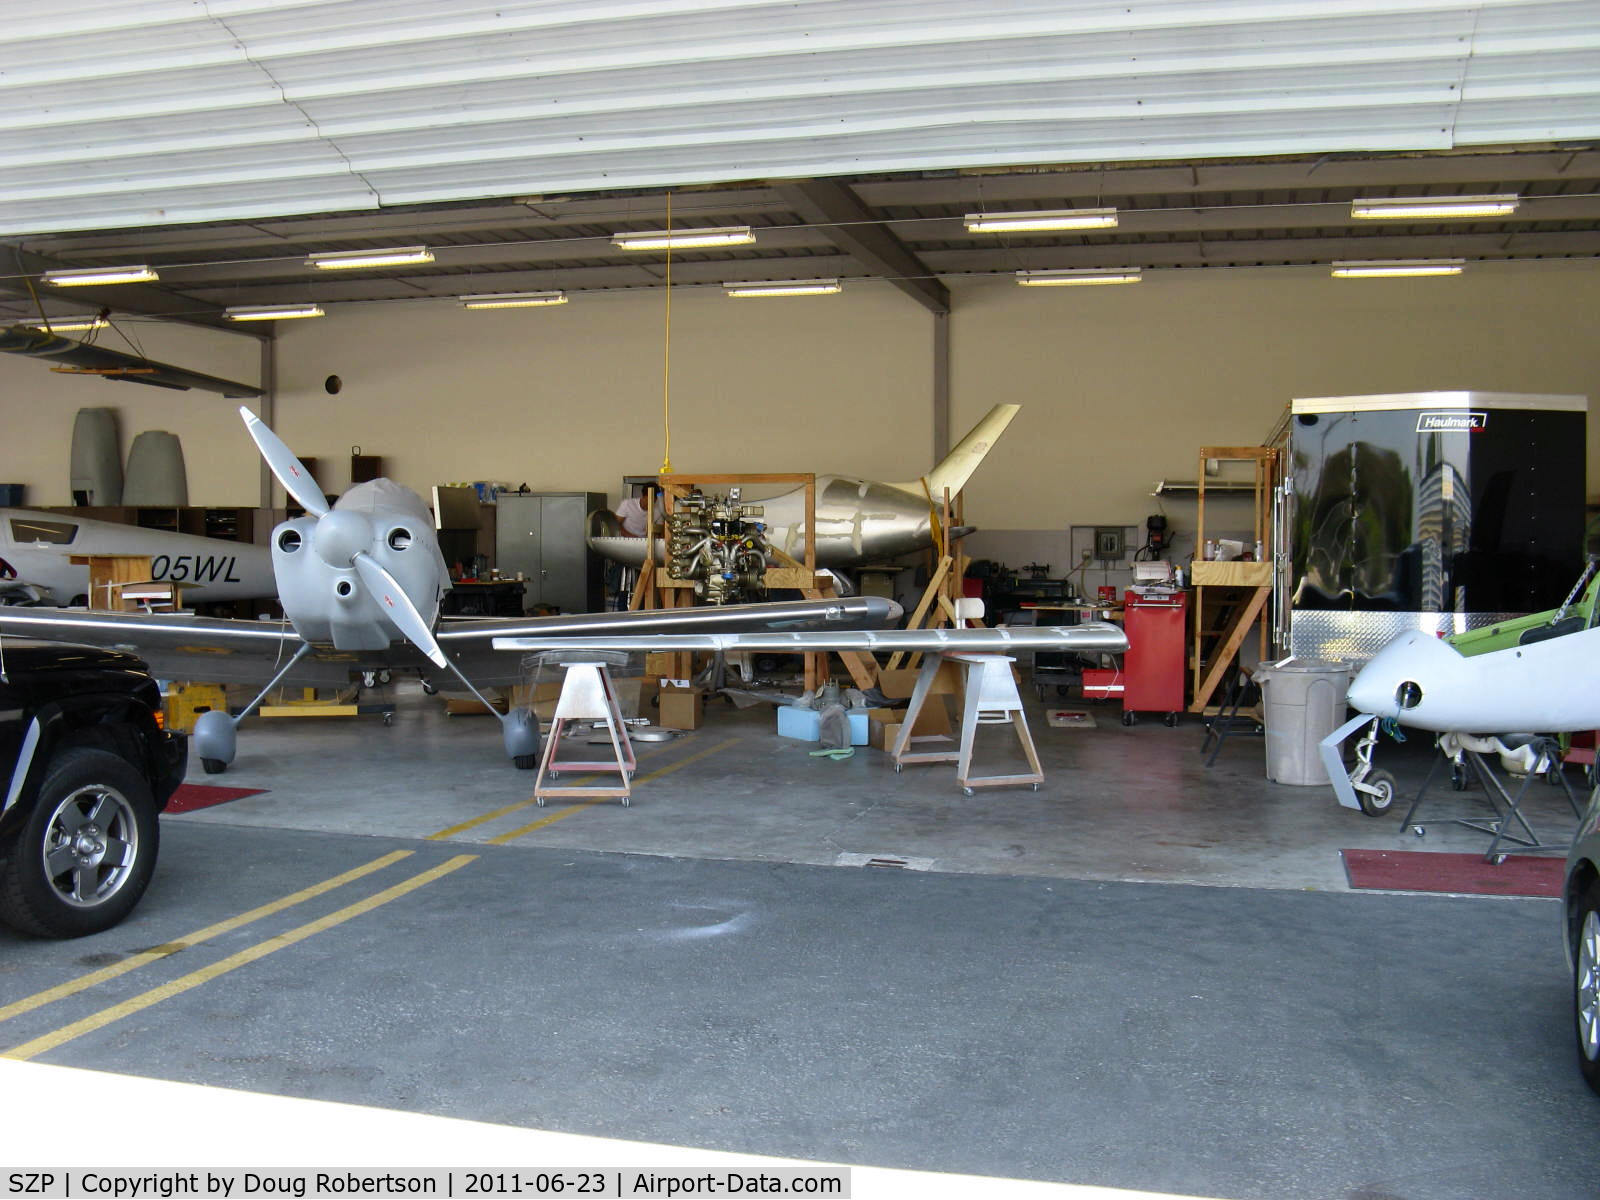 Santa Paula Airport (SZP) - Aviation F/X. Assorted Experimental aircraft, In build. Left to right-rare White Lightning, Van's RV, Questair Venture, BD-FLS MICROJET, Quantum Turbine TJ100 jet engine